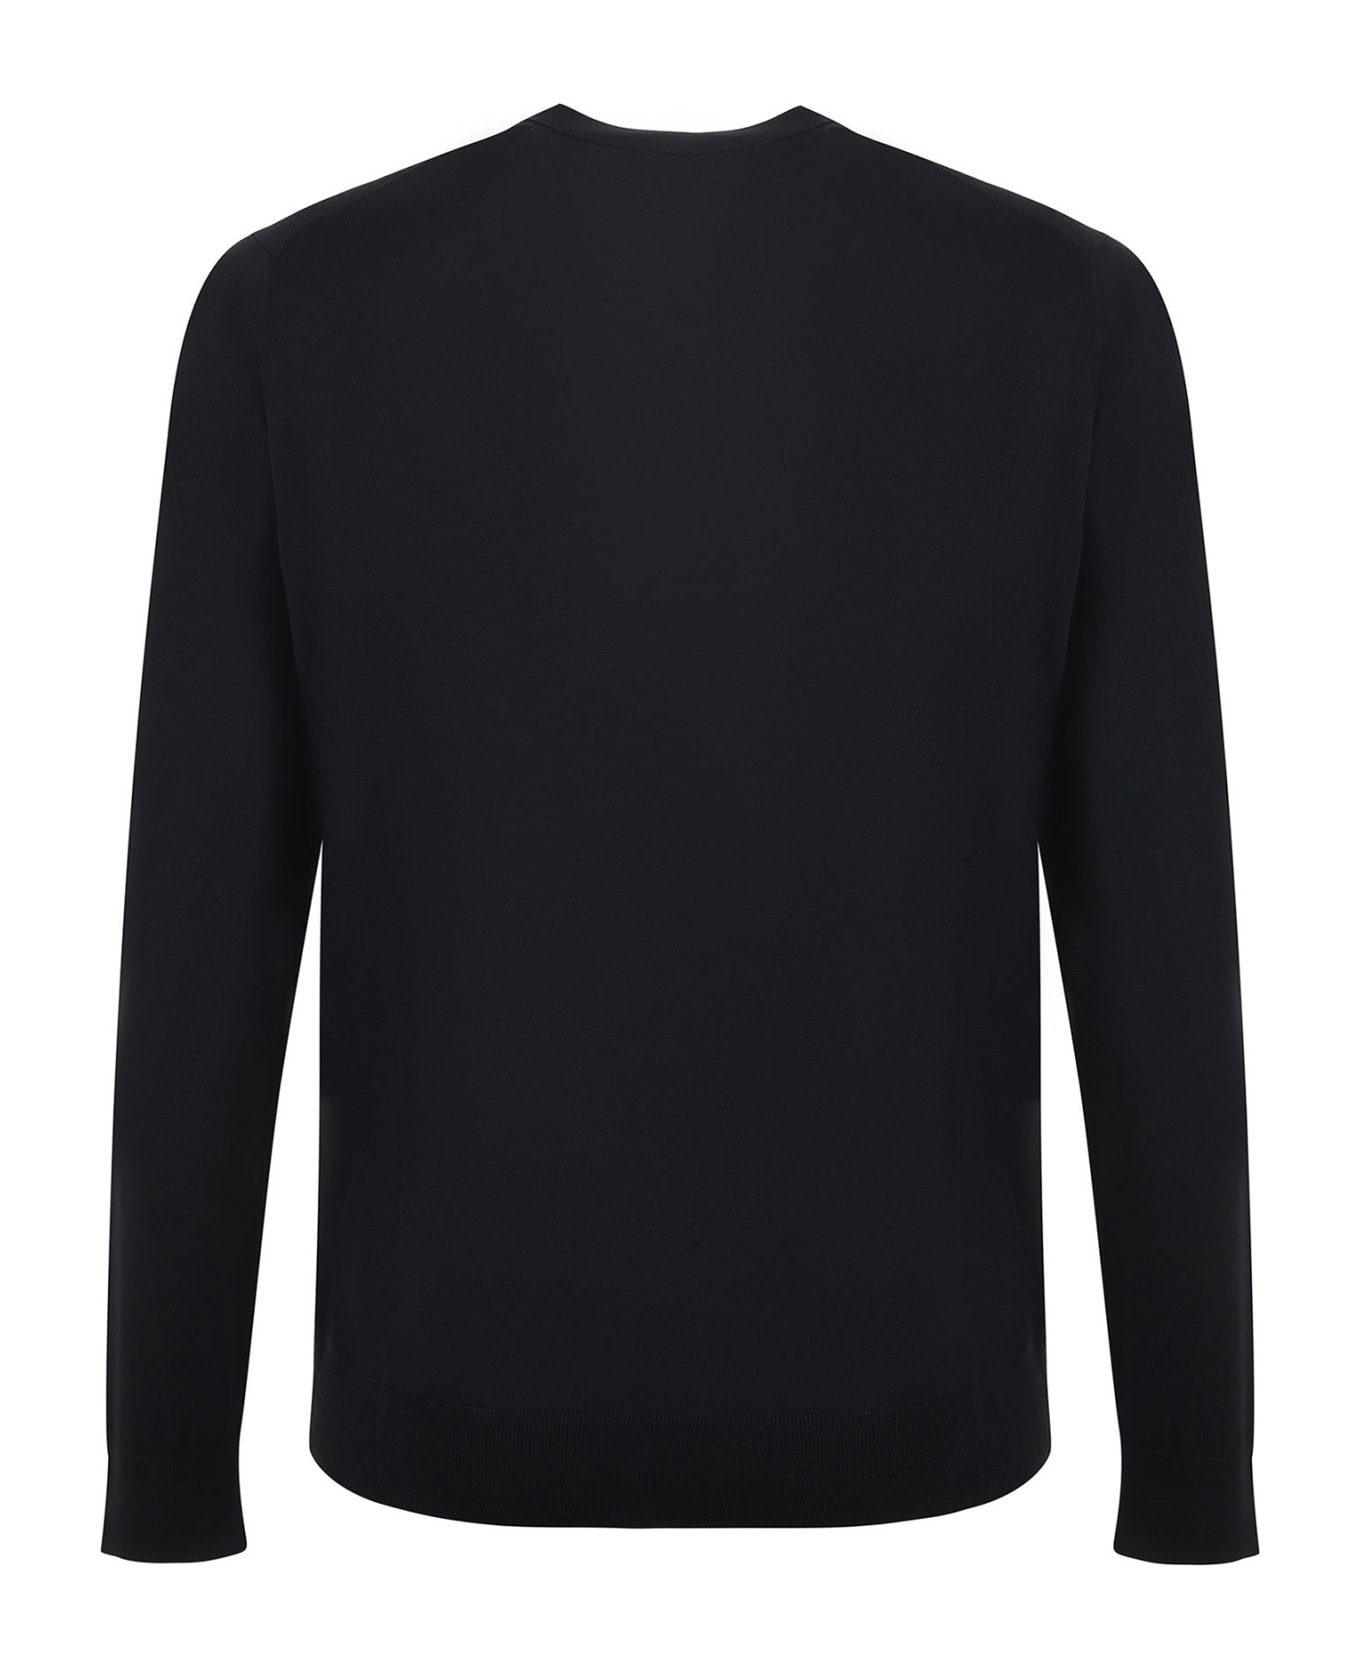 Paolo Pecora Black Crew-neck Sweater In Cotton And Silk Blend - NERO ニットウェア